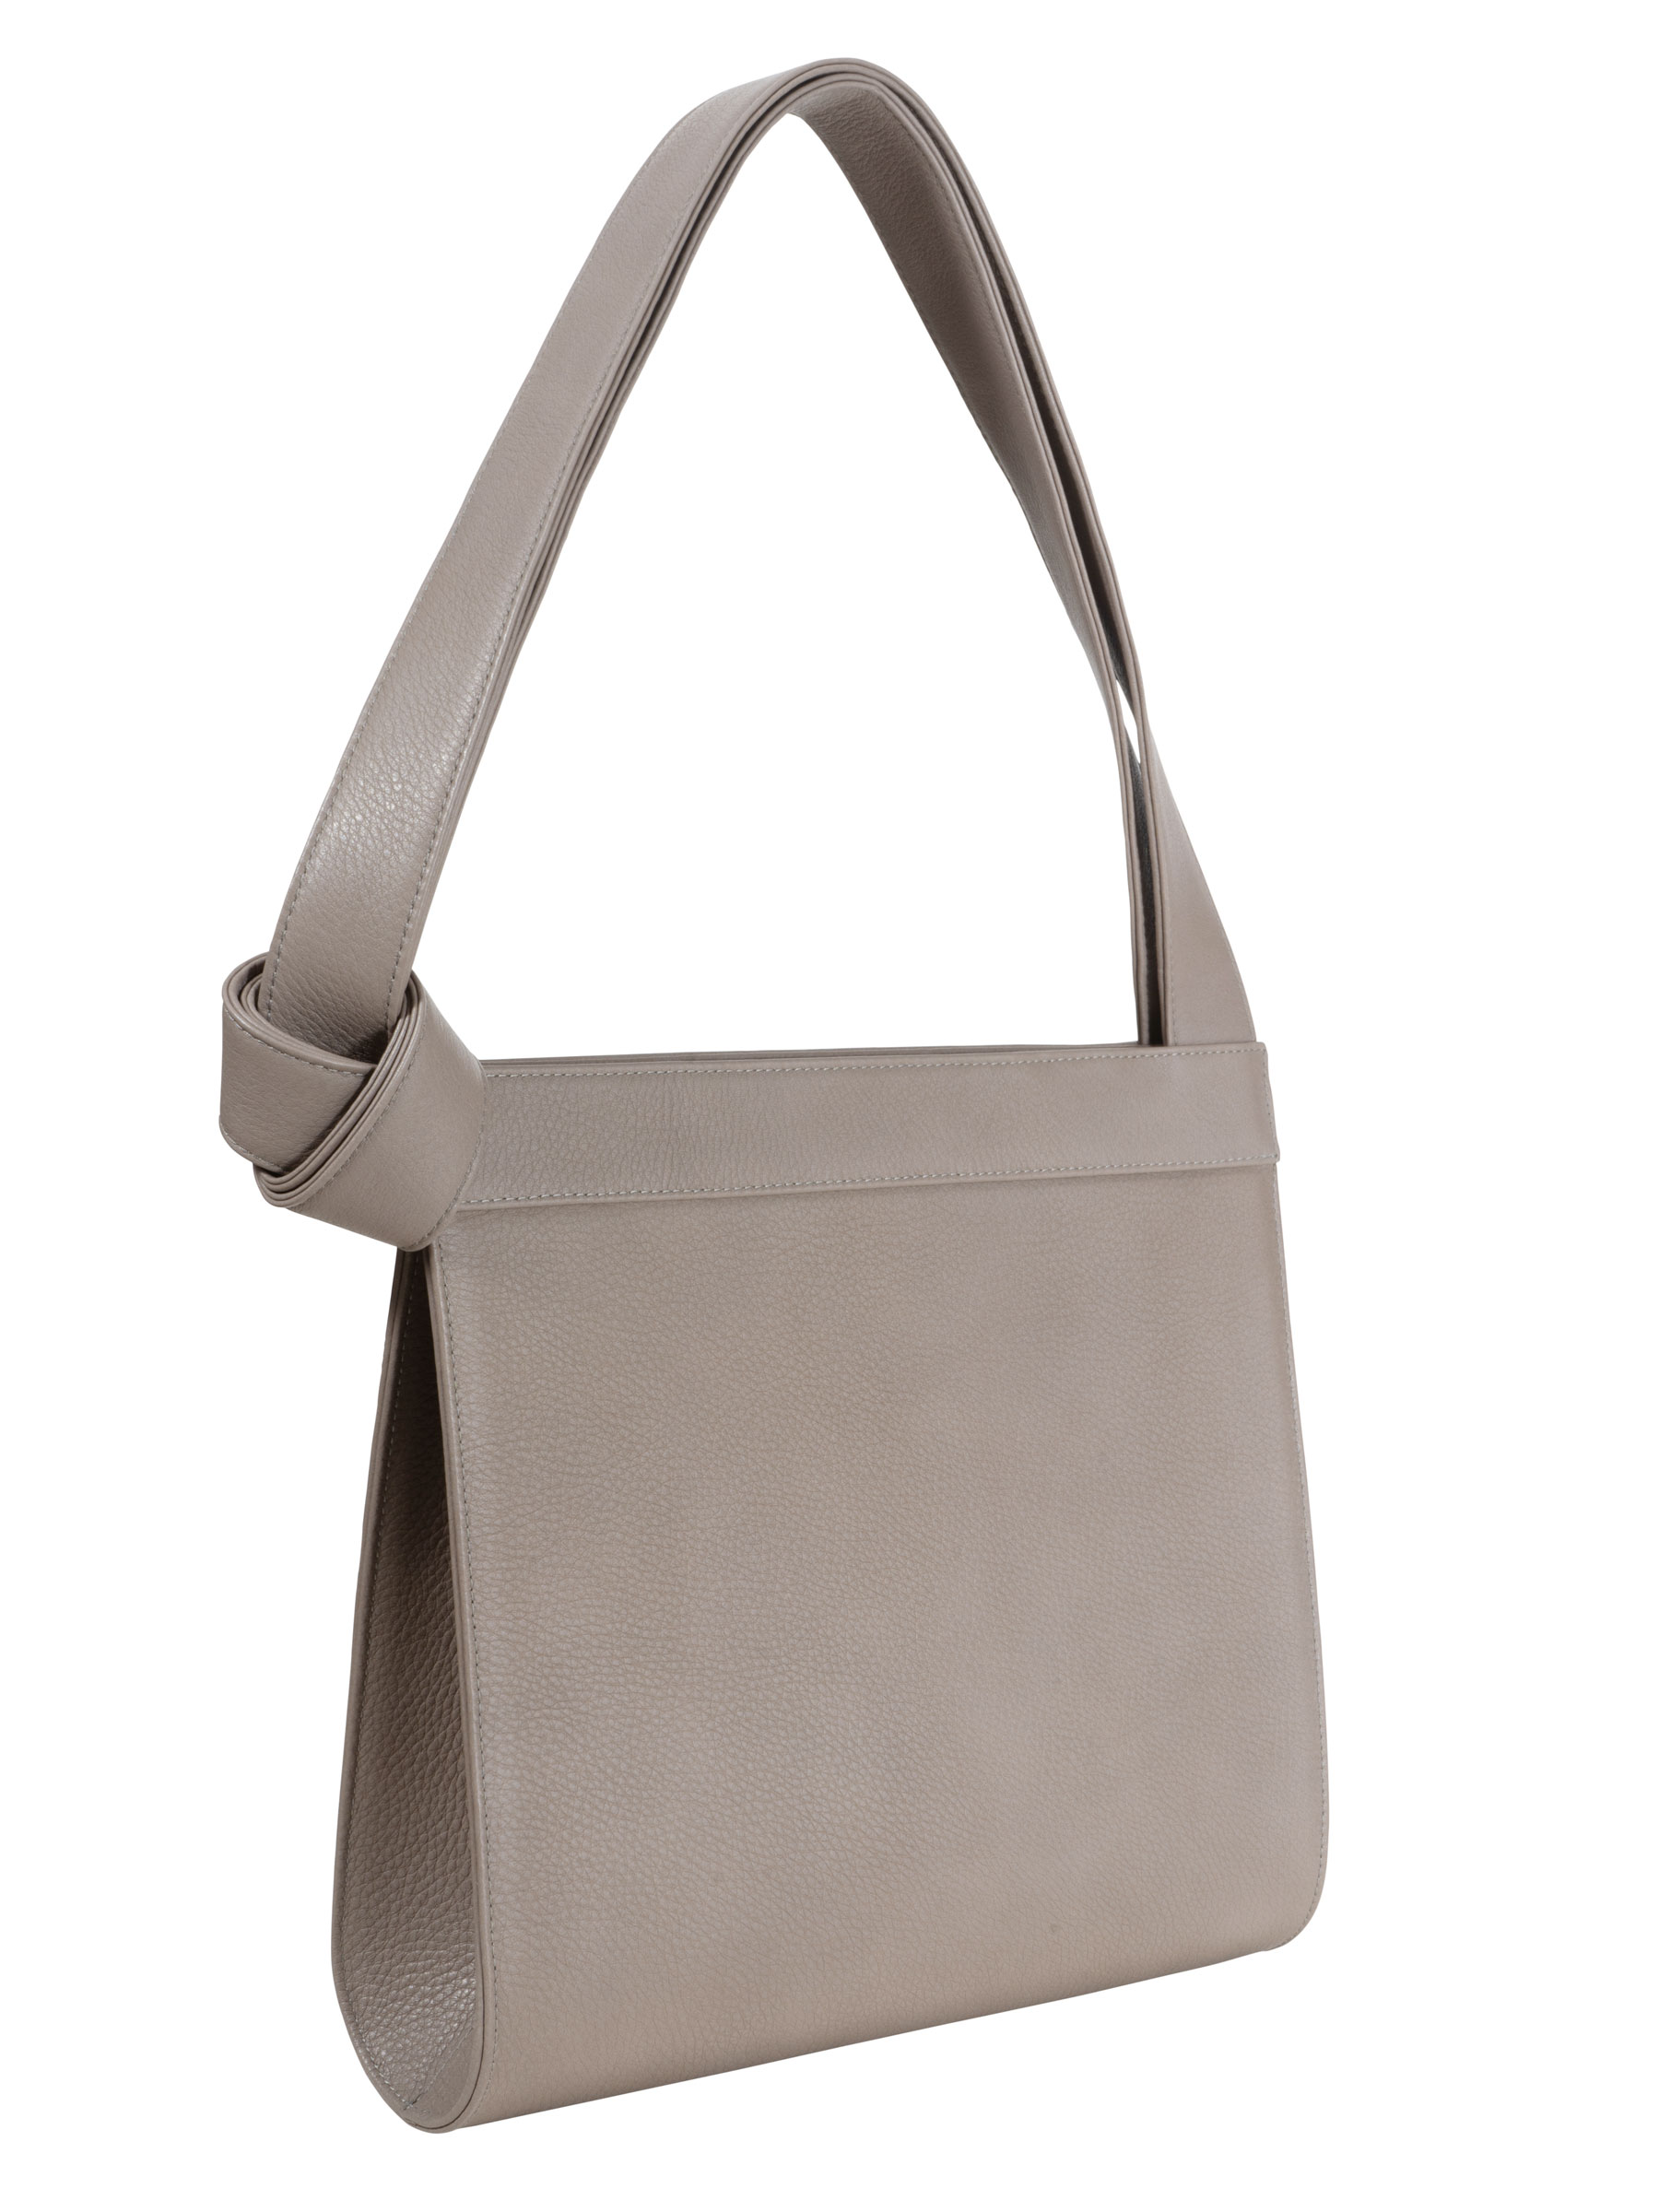 TAPE shoulder bag in grey calfskin leather | TSATSAS